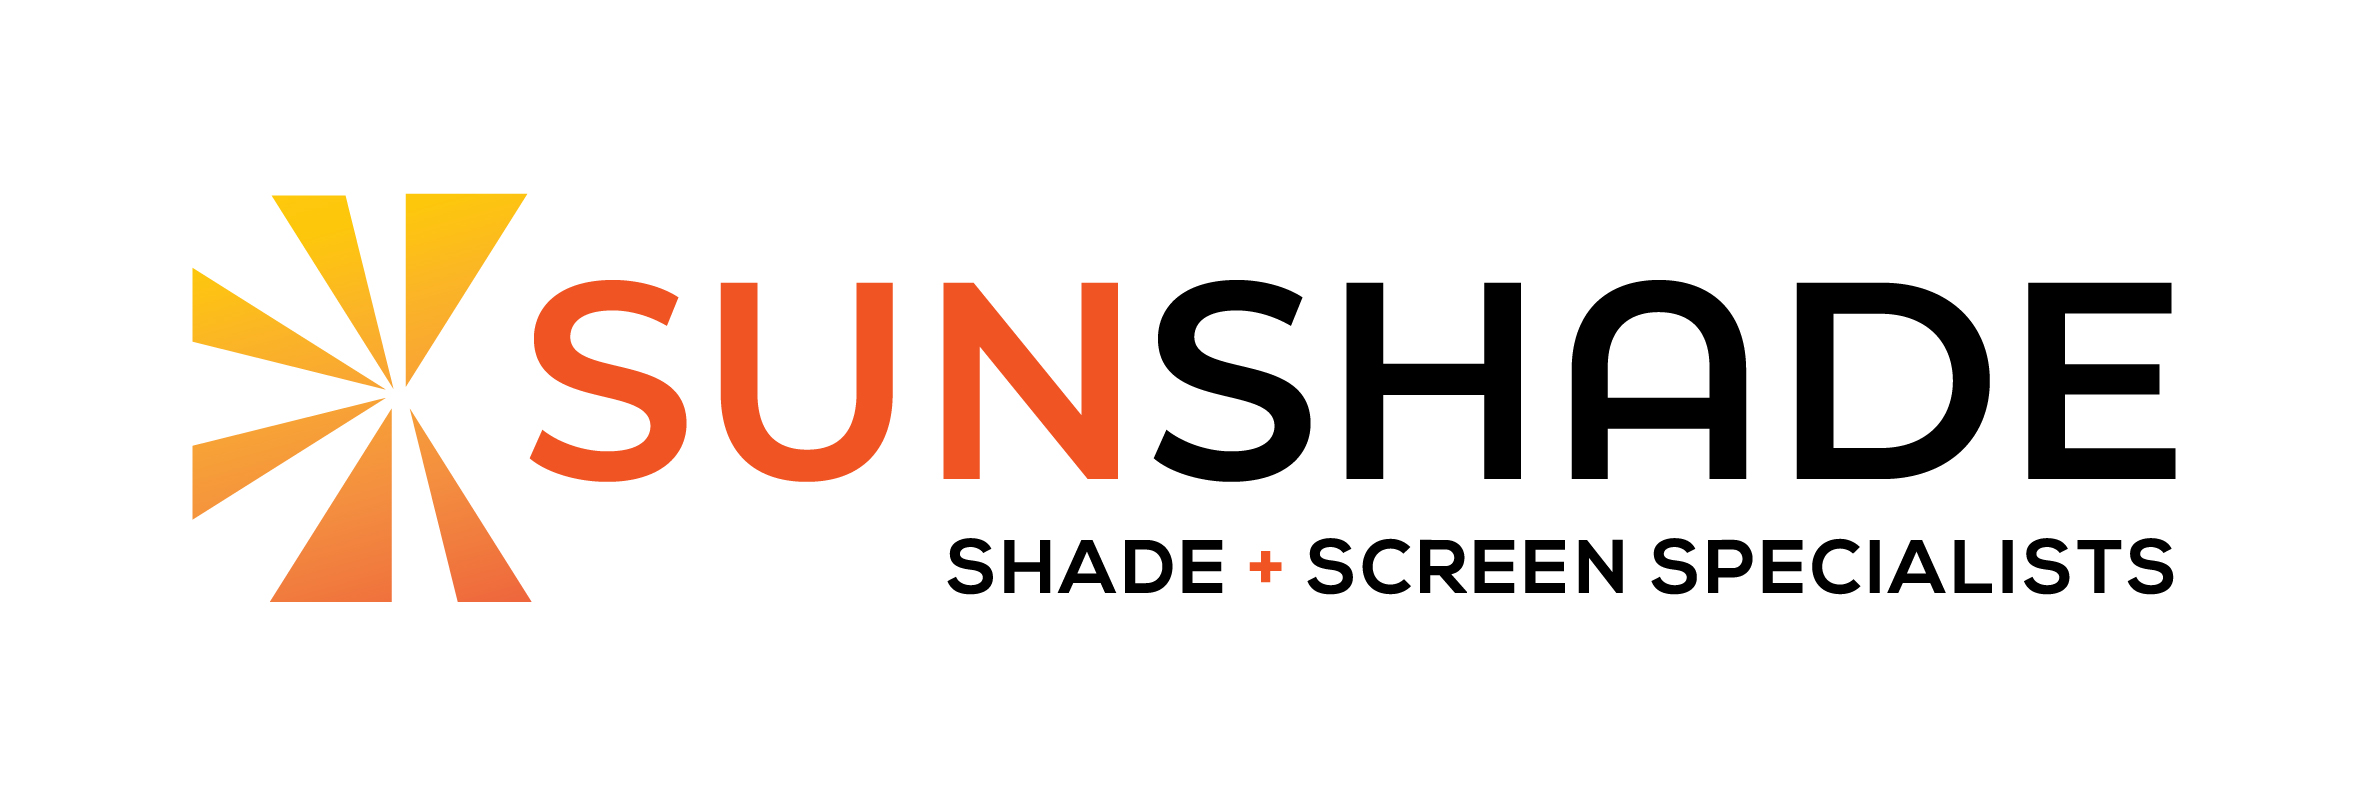 Sunshade Shade + Screen Specialists logo